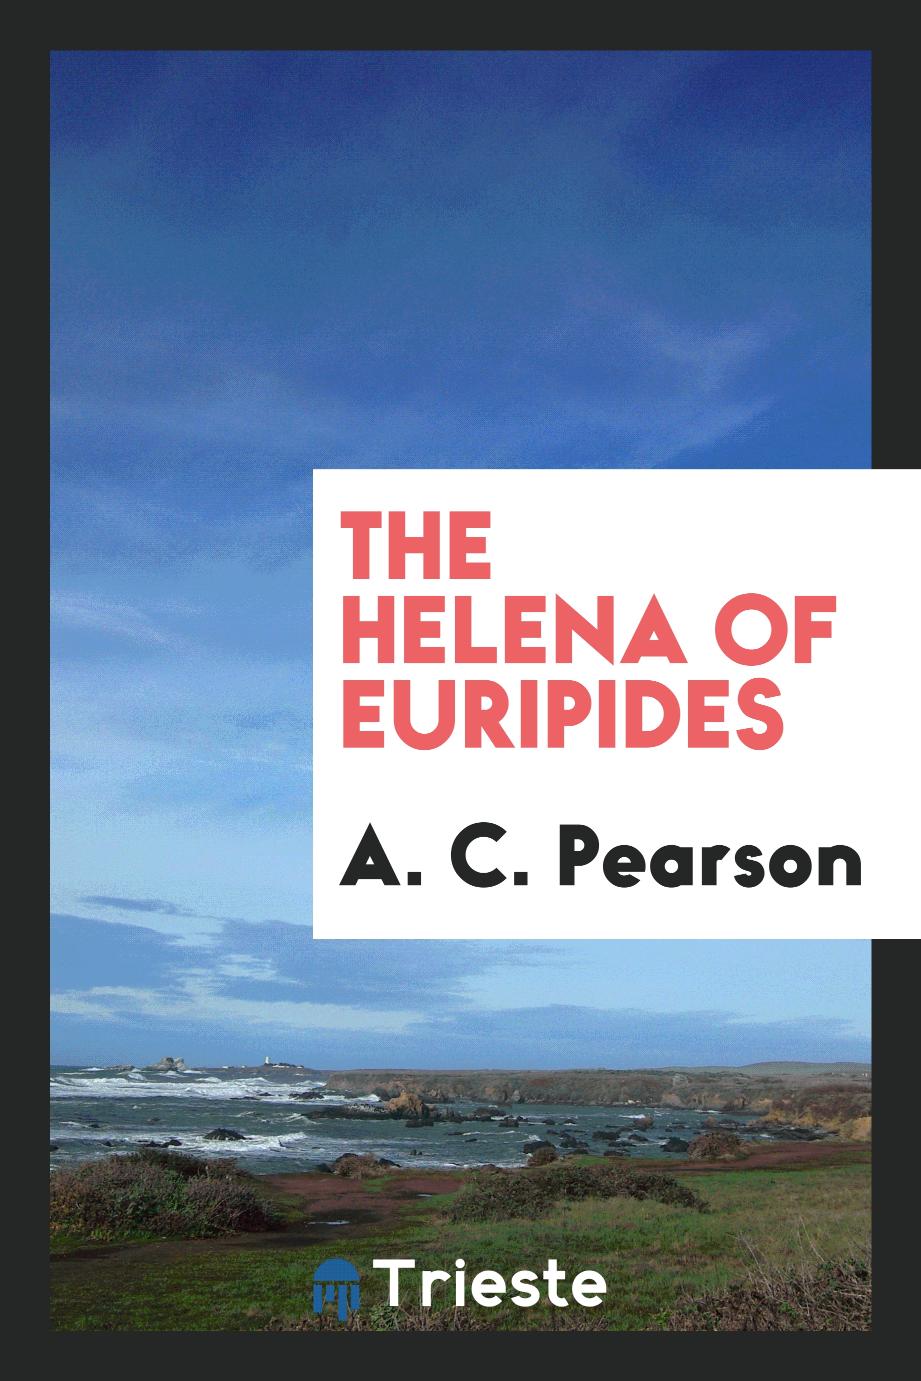 The Helena of euripides